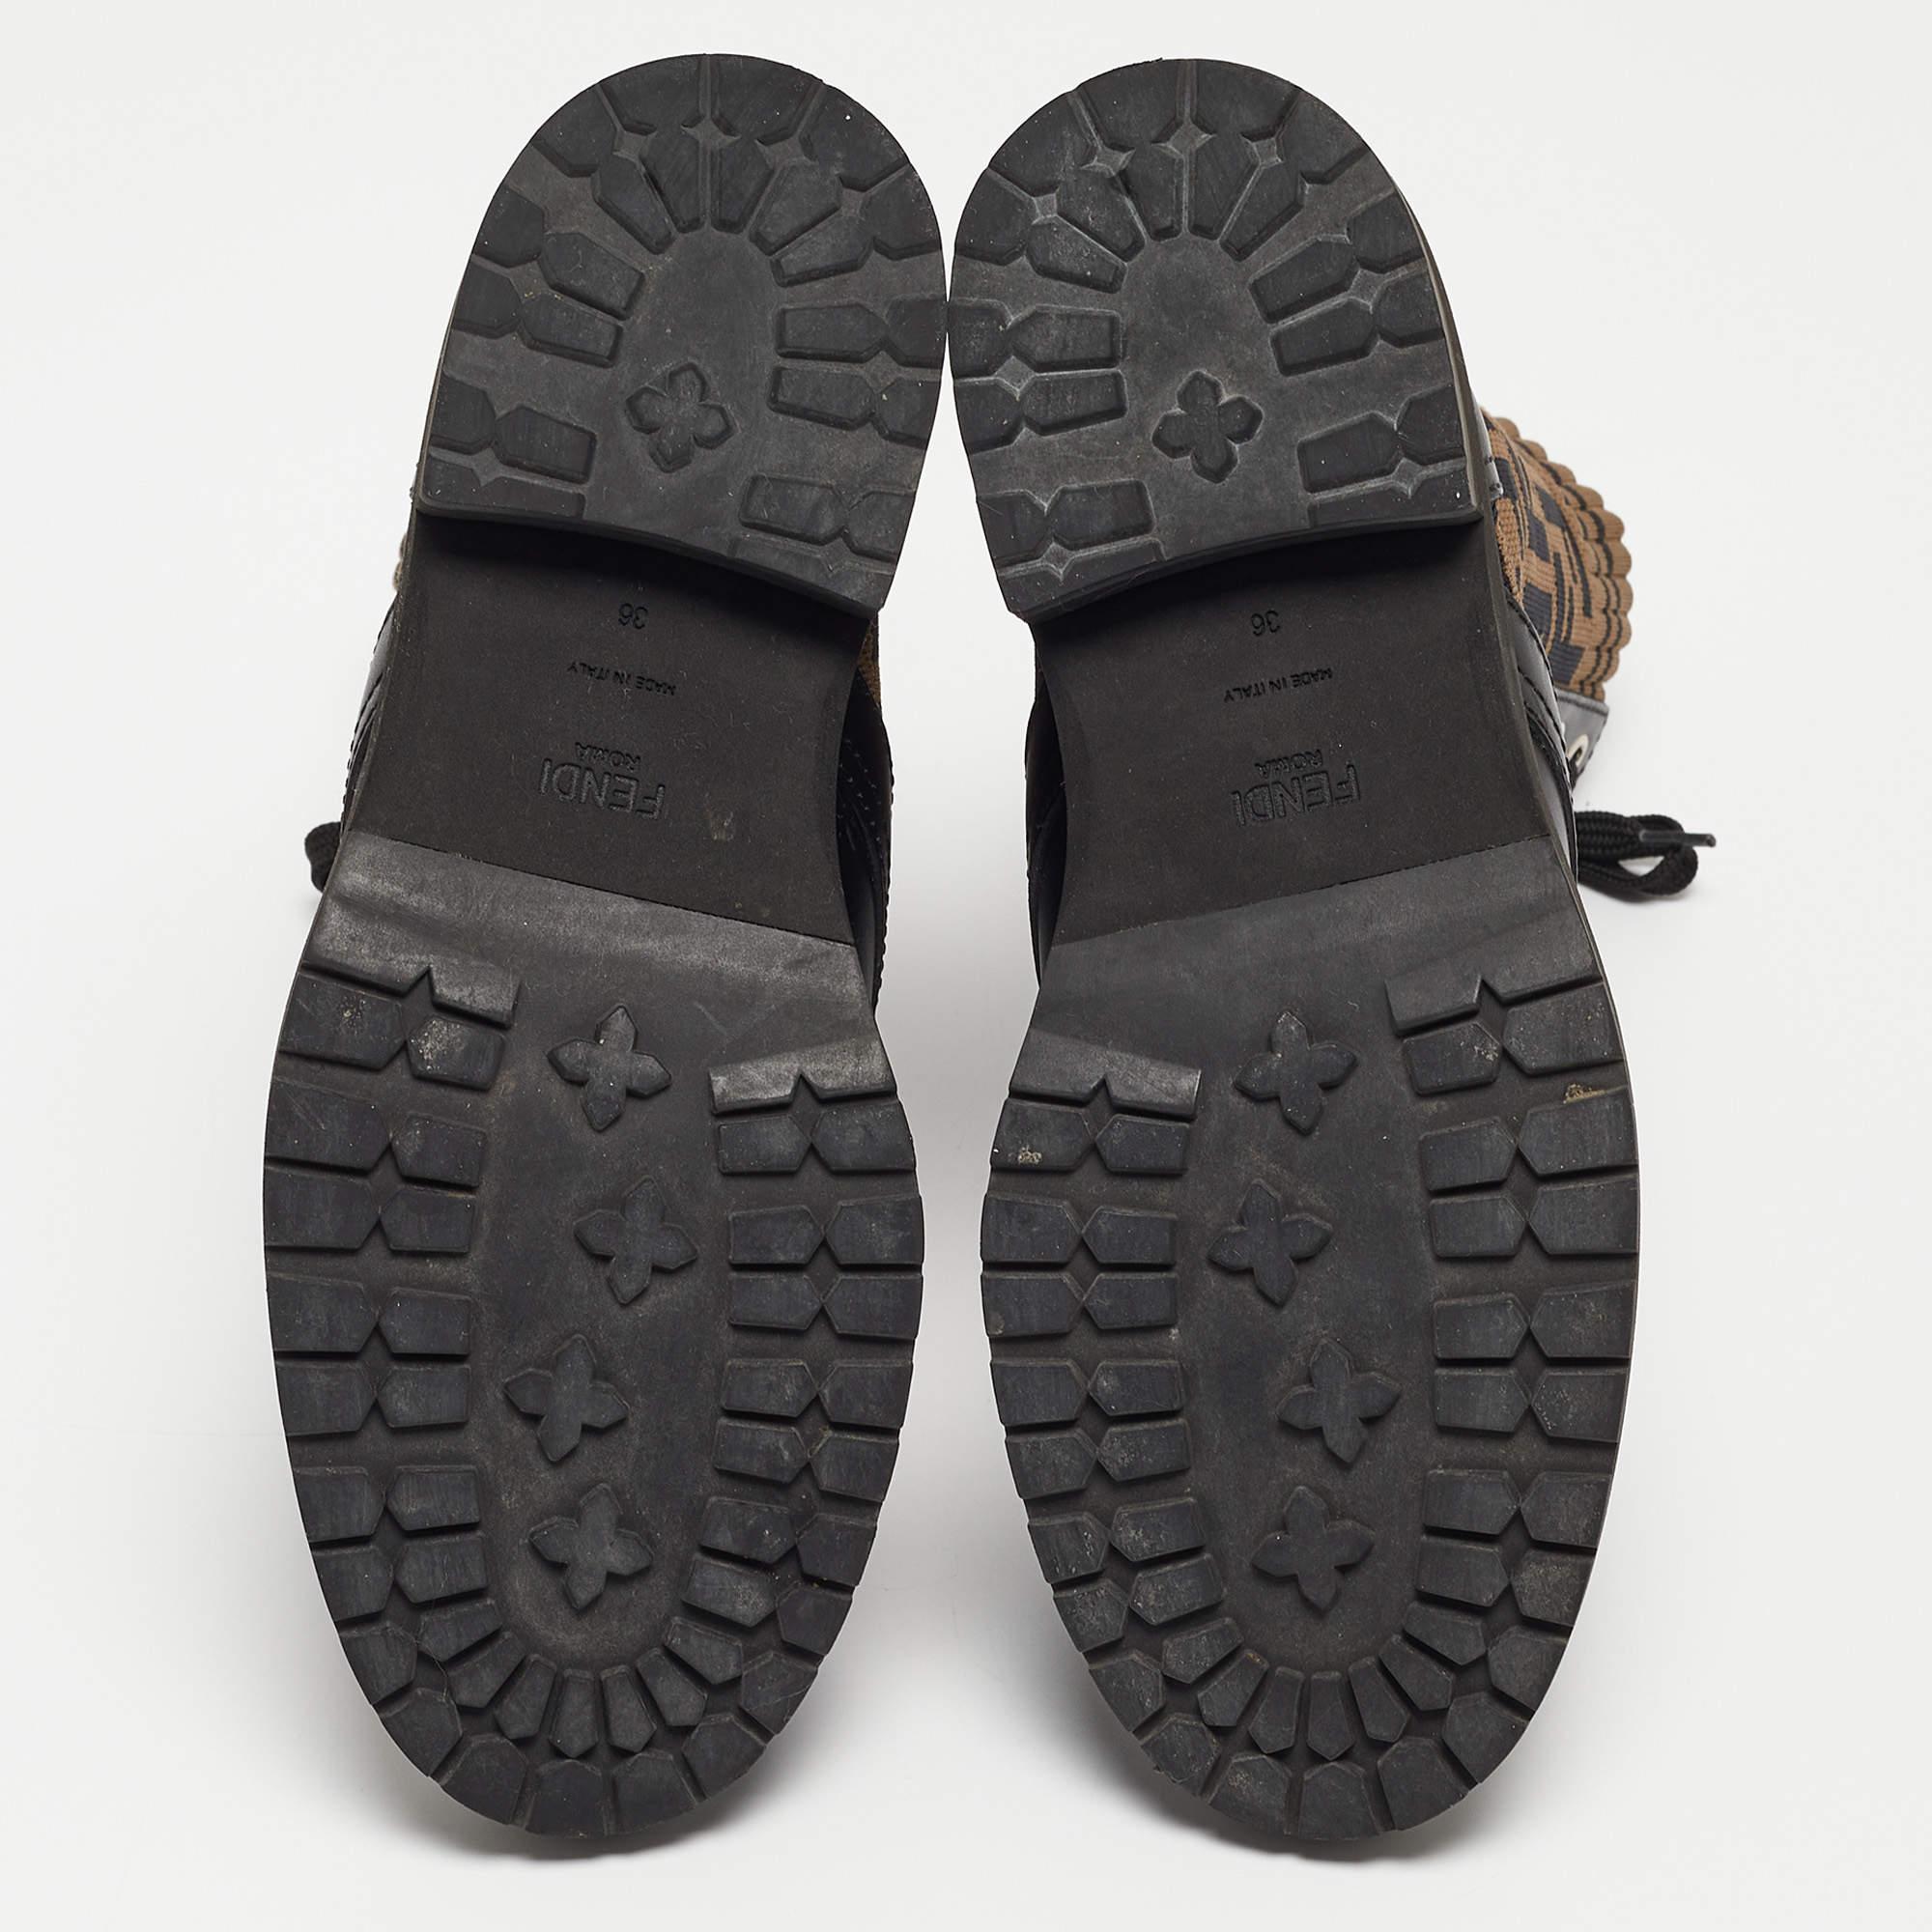 Fendi Black Leather and Zucca Stretch Fabric Rockoko Combat Boots Size 36 2